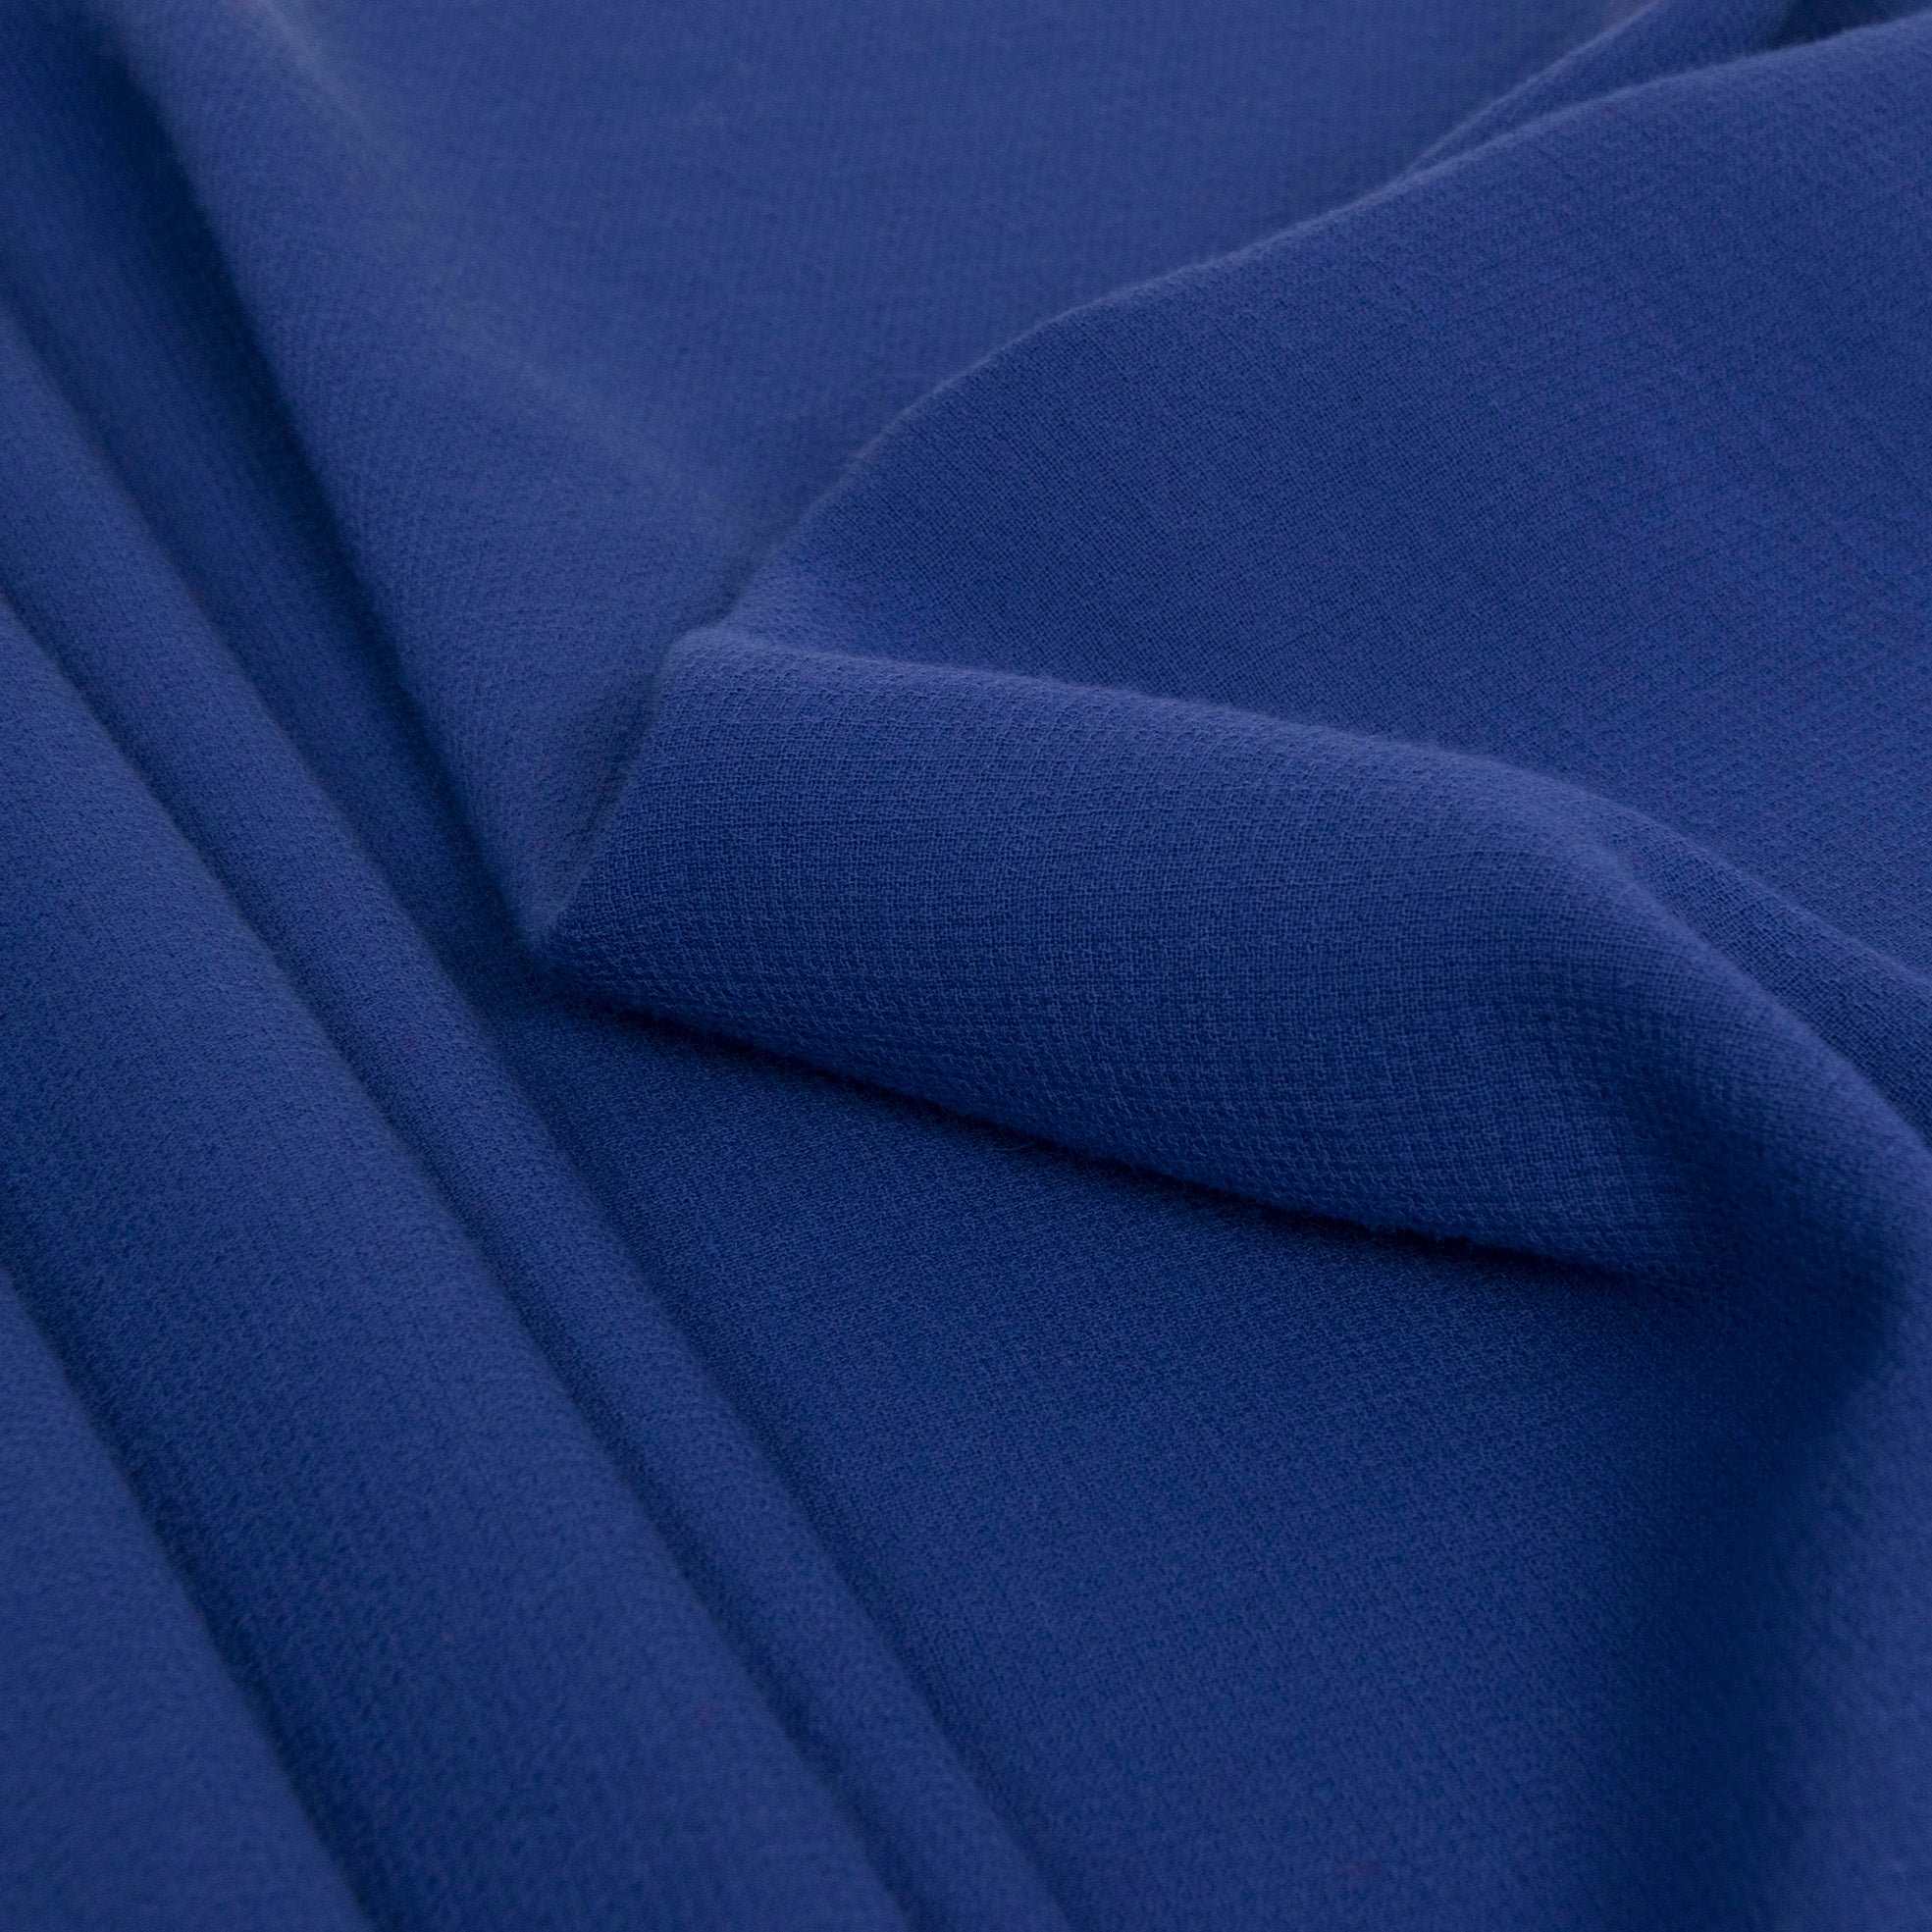 Royal Blue Doublewave Crepe 1876 - Fabrics4Fashion